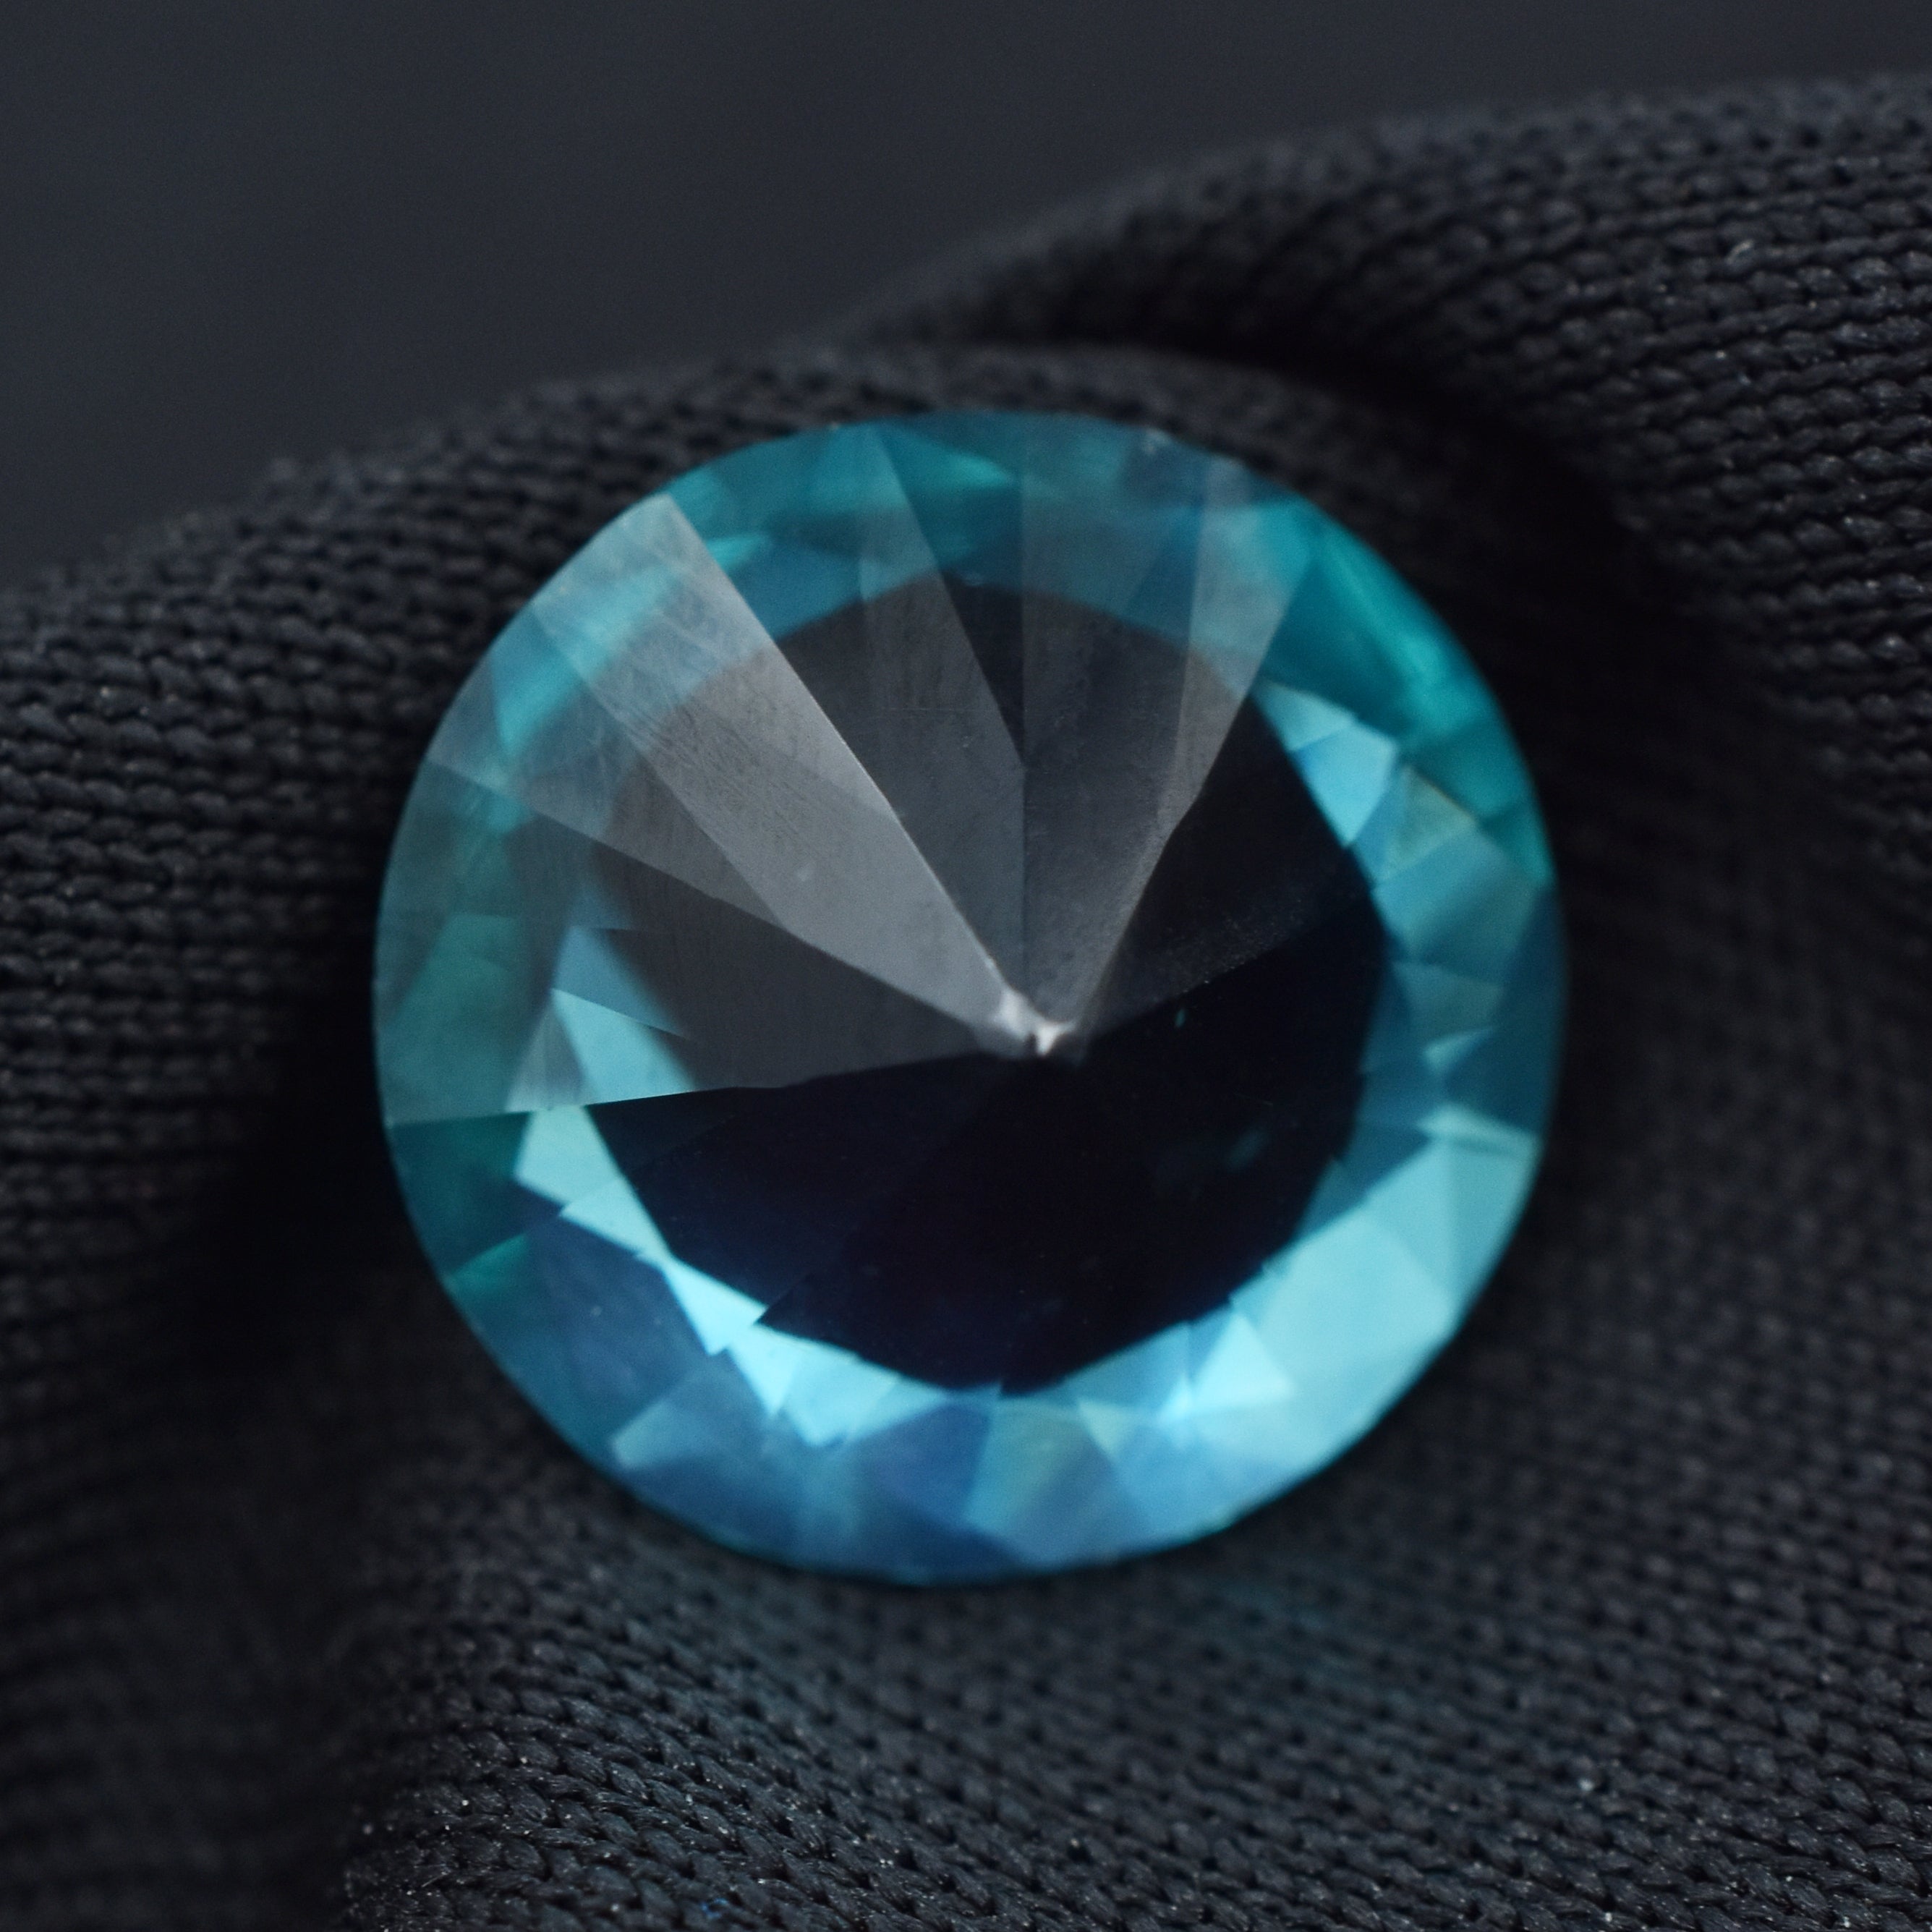 Very Beautiful Blue Teal Sapphire 6.95 Carat Round Cut Certified Natural Loose Gemstone Sapphire Gem